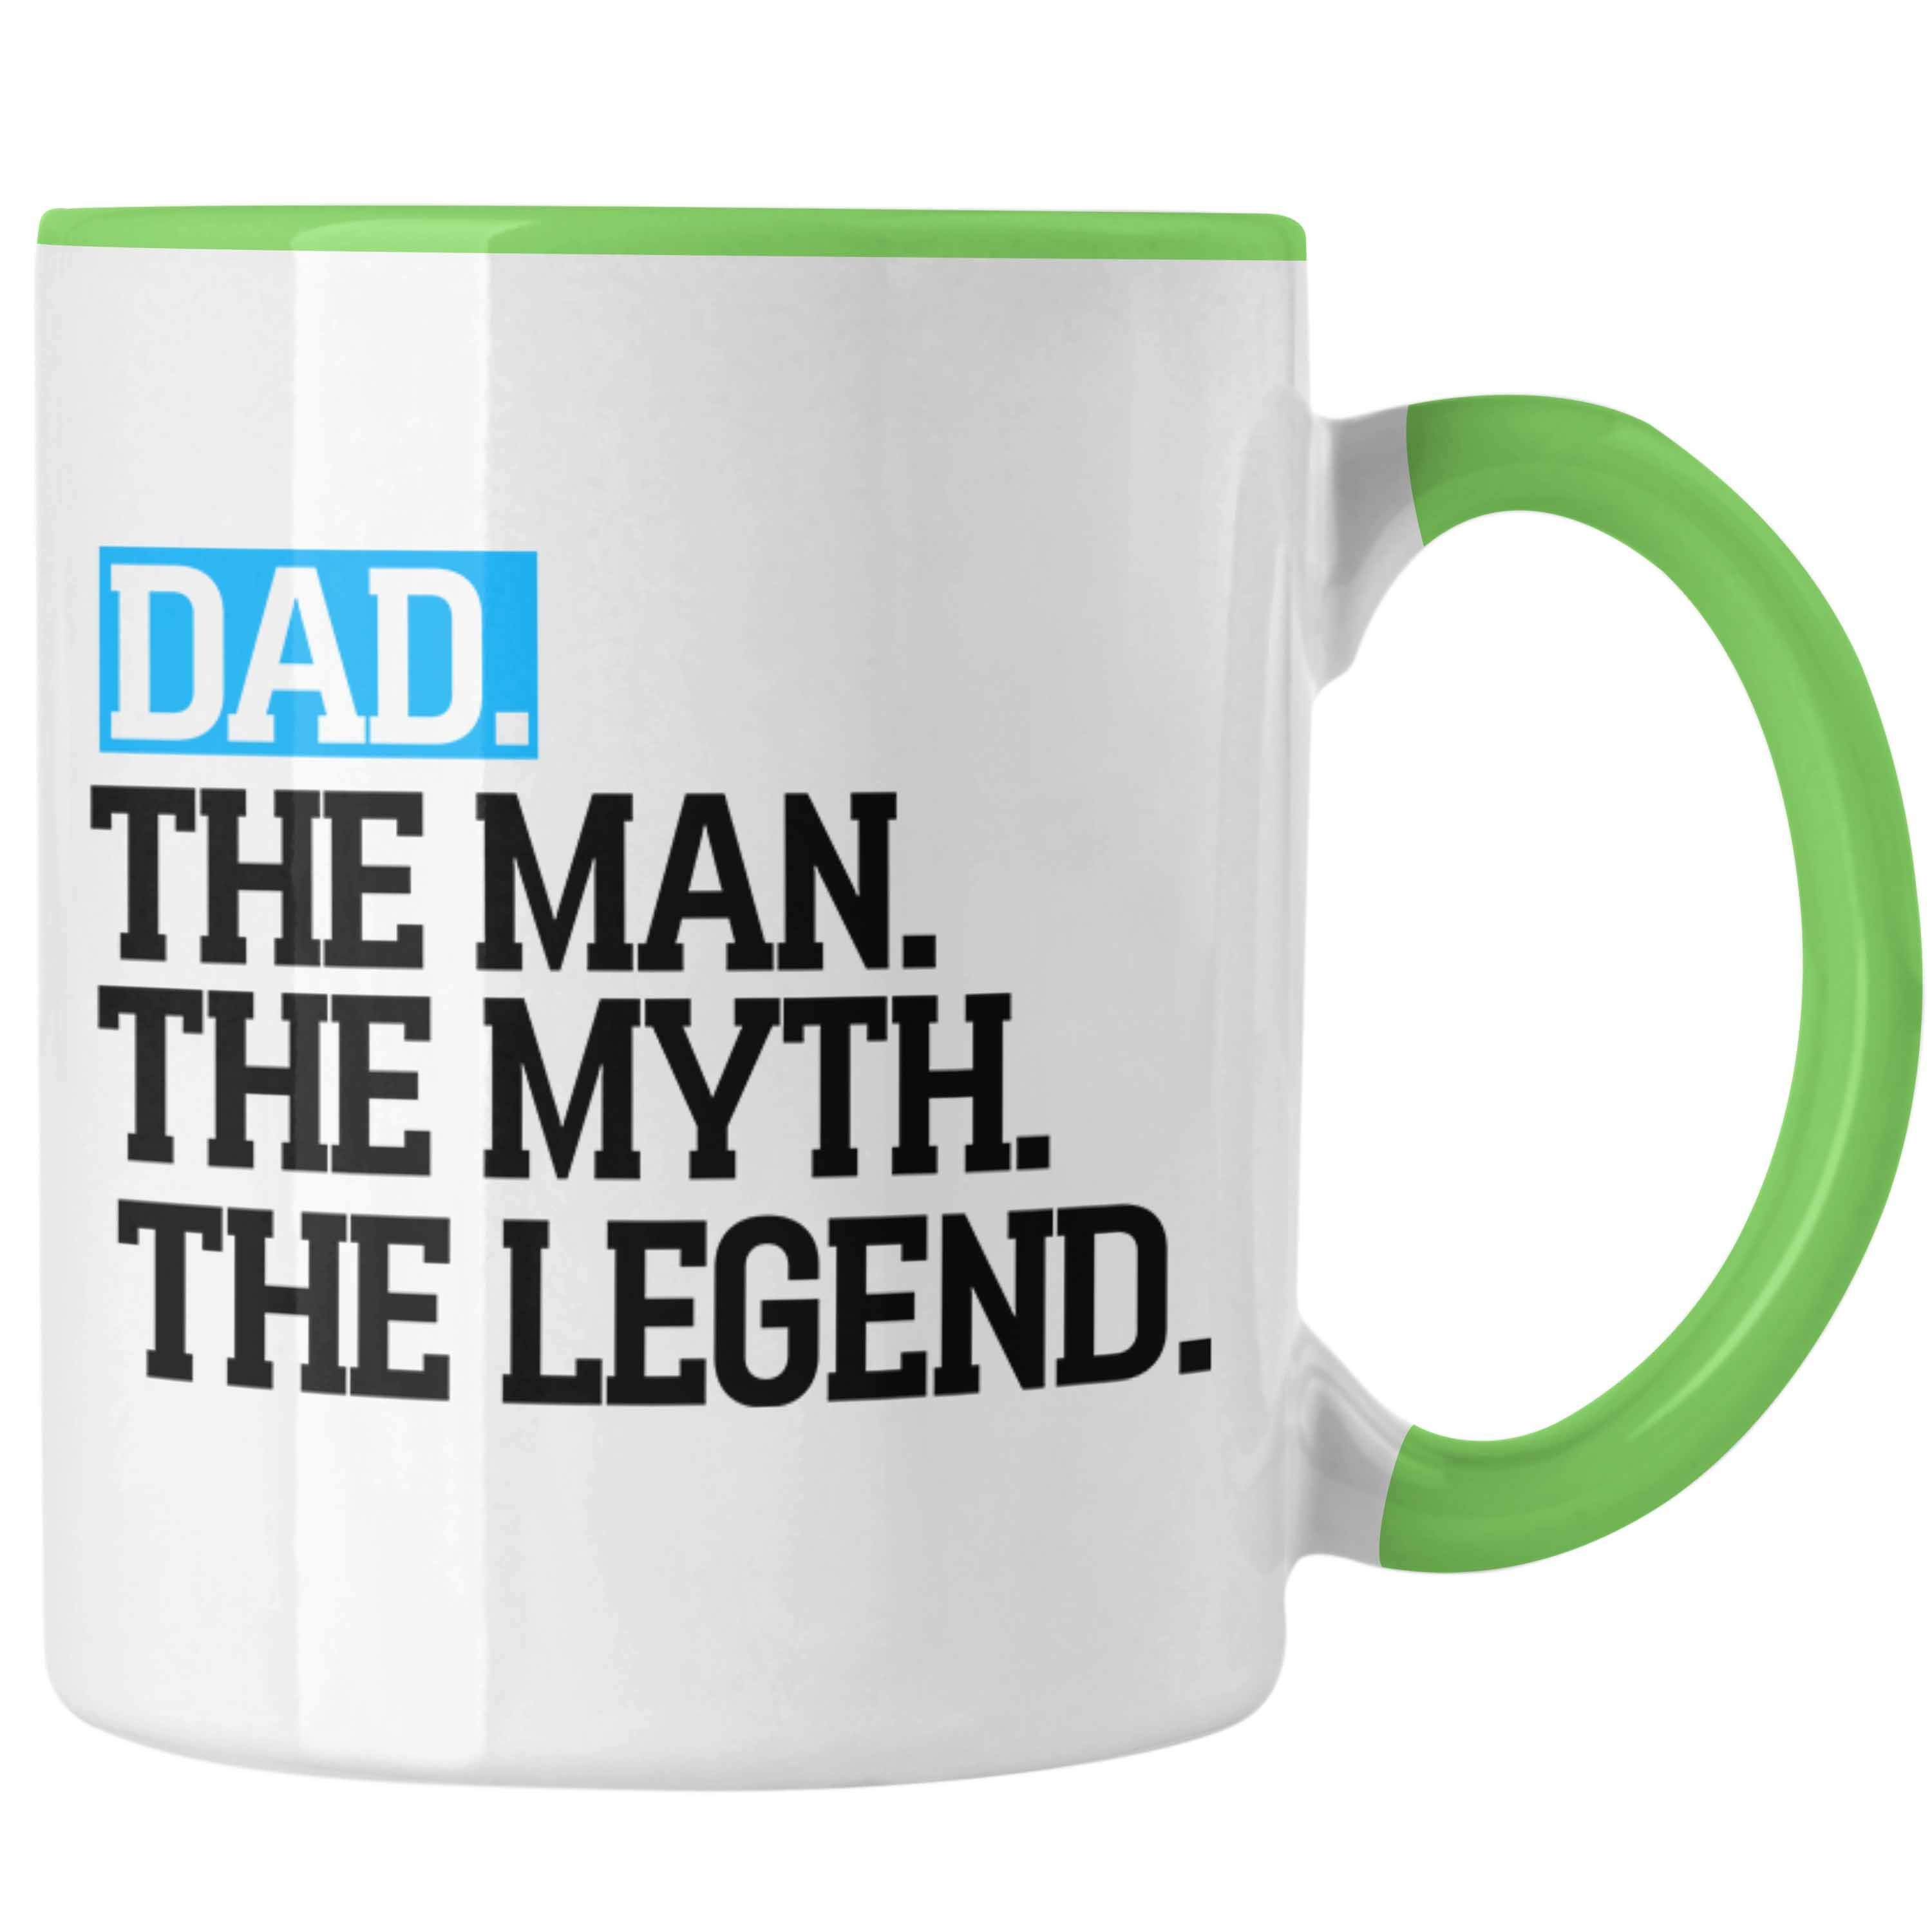 Trendation Tasse Tasse für Vater Lustig "Dad The Man The Myth The Legend" Vatertag Spru Grün